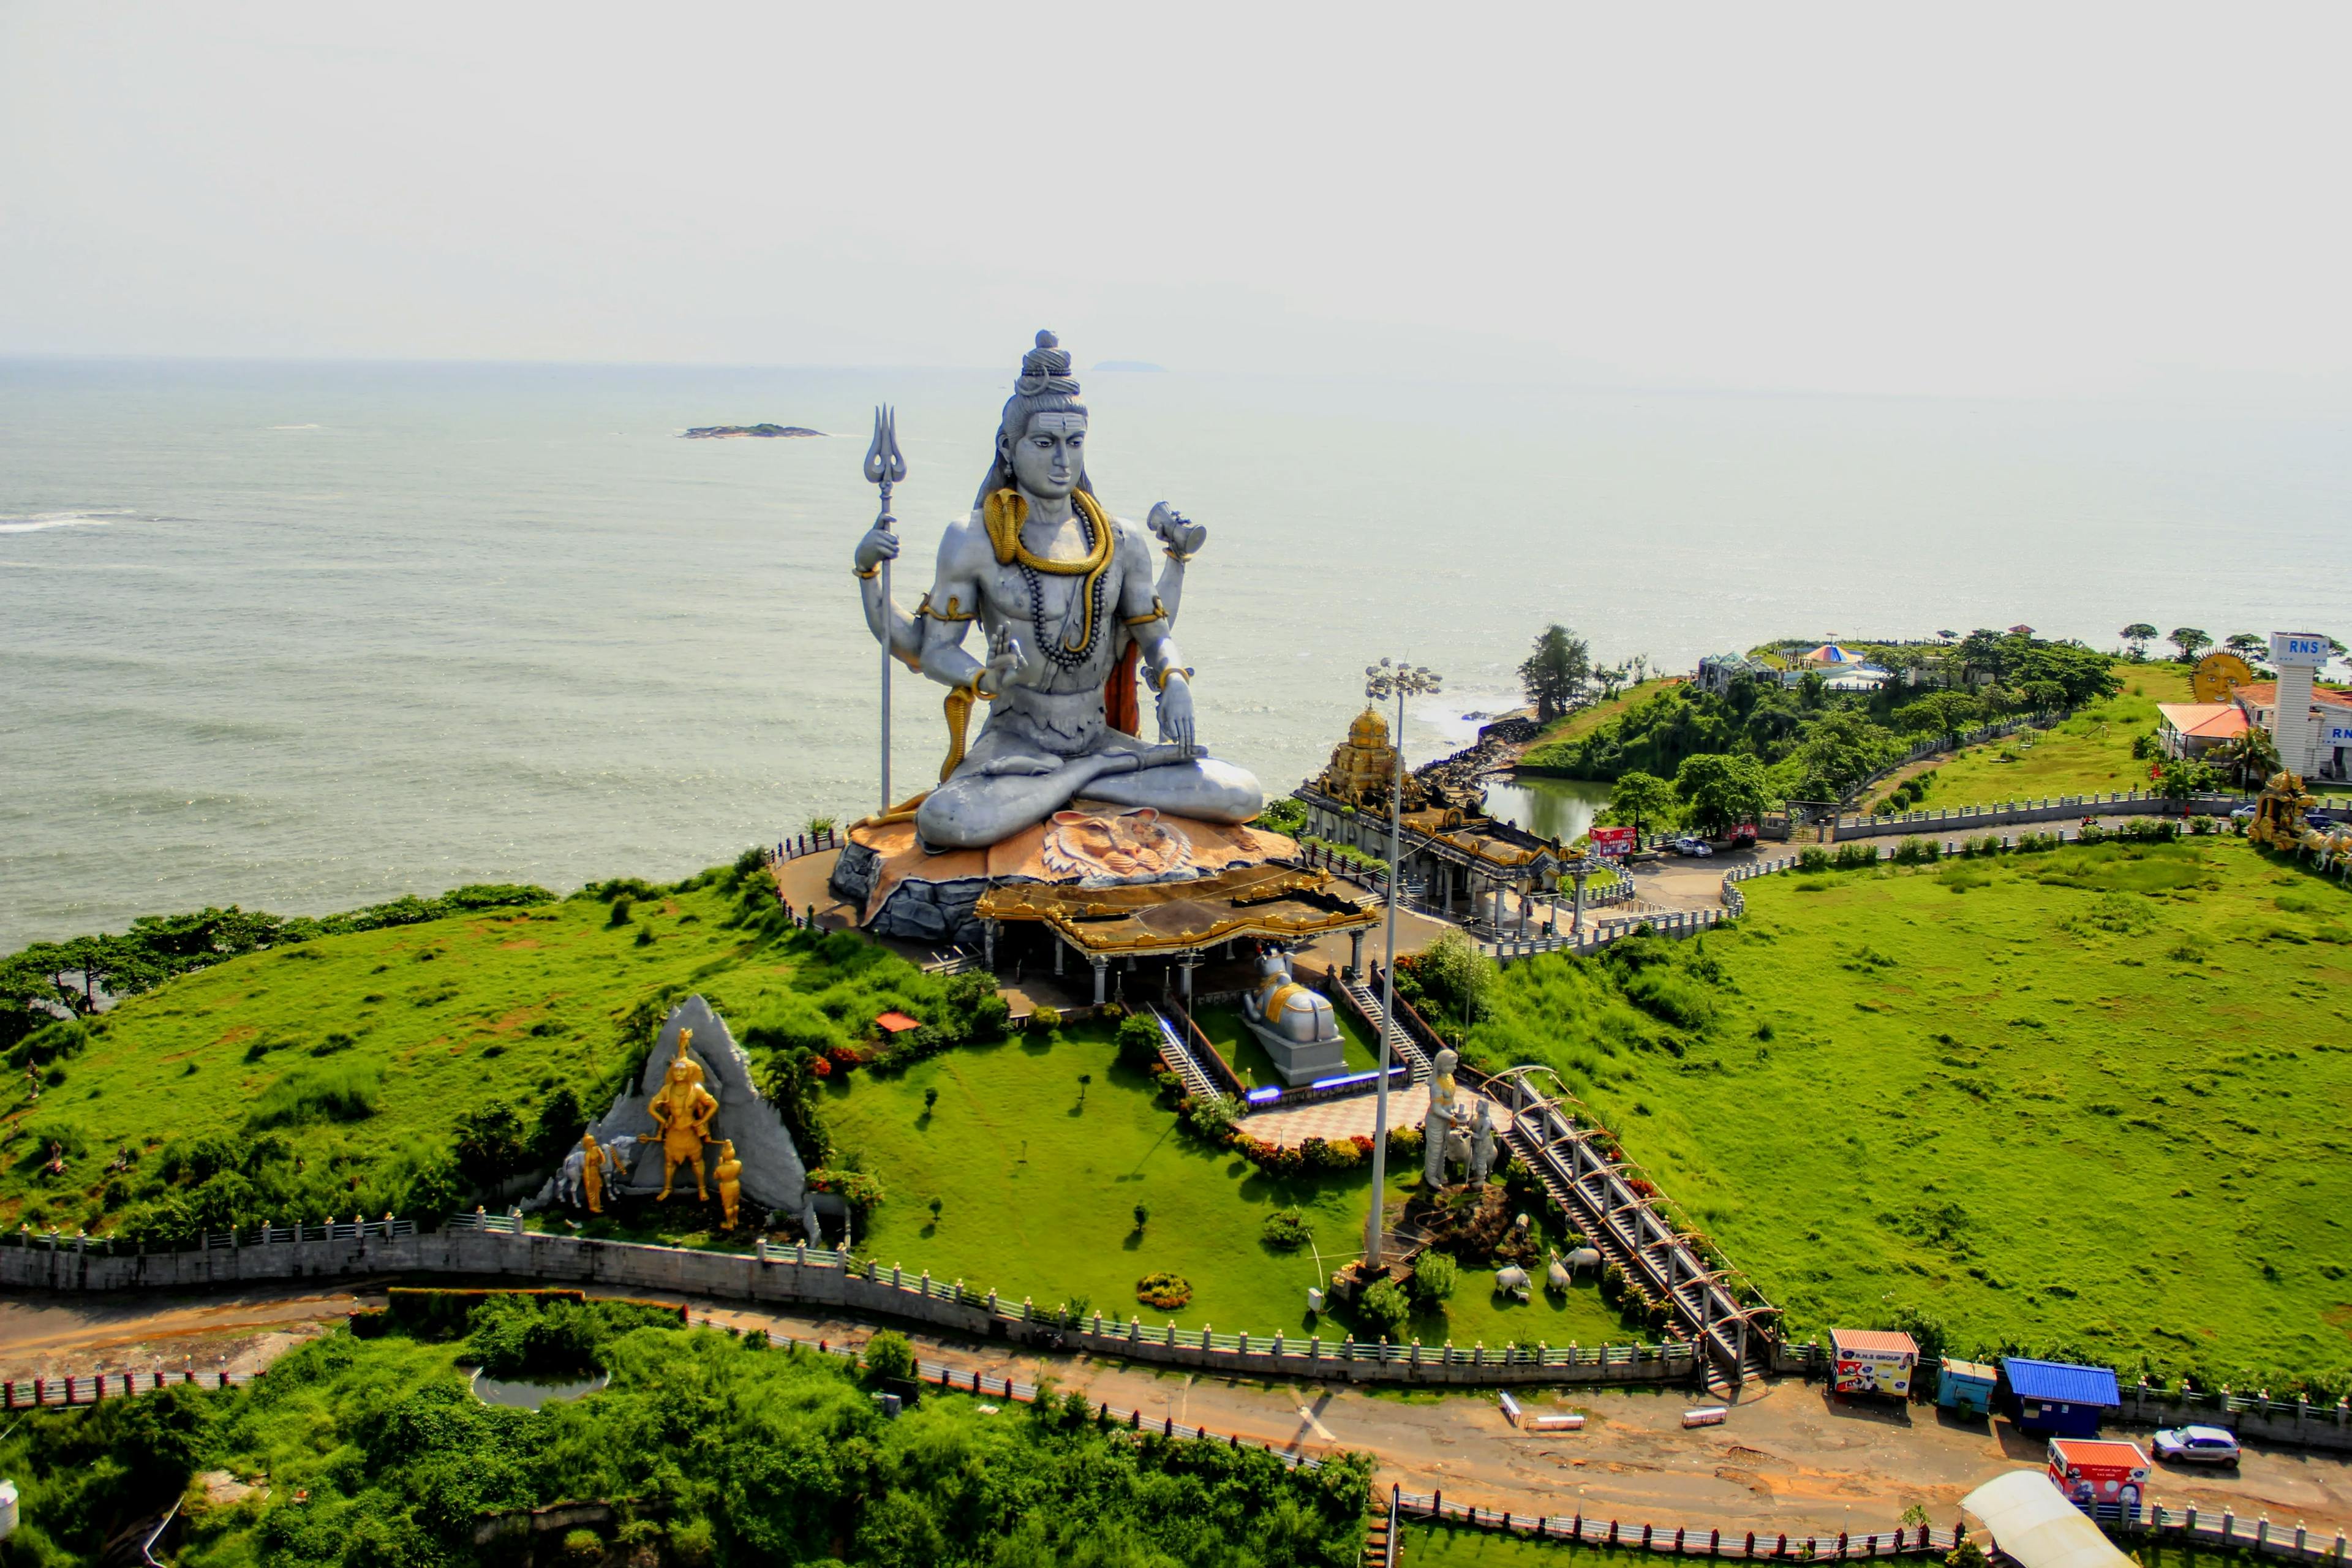 Gokarna-Murudeshwar Weekend Getaway: Majestic Lord Shiva by the Seaside